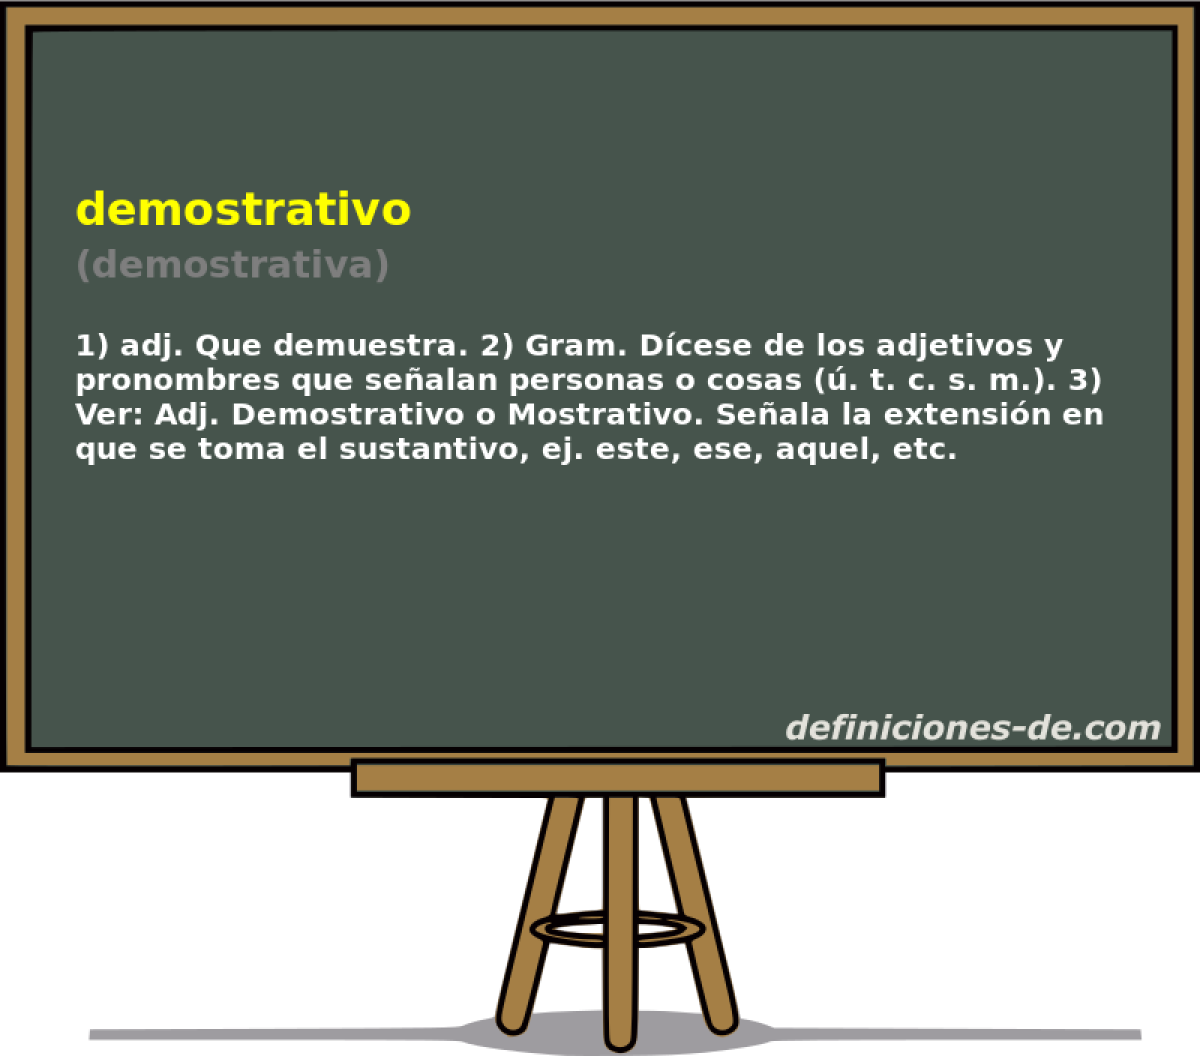 demostrativo (demostrativa)